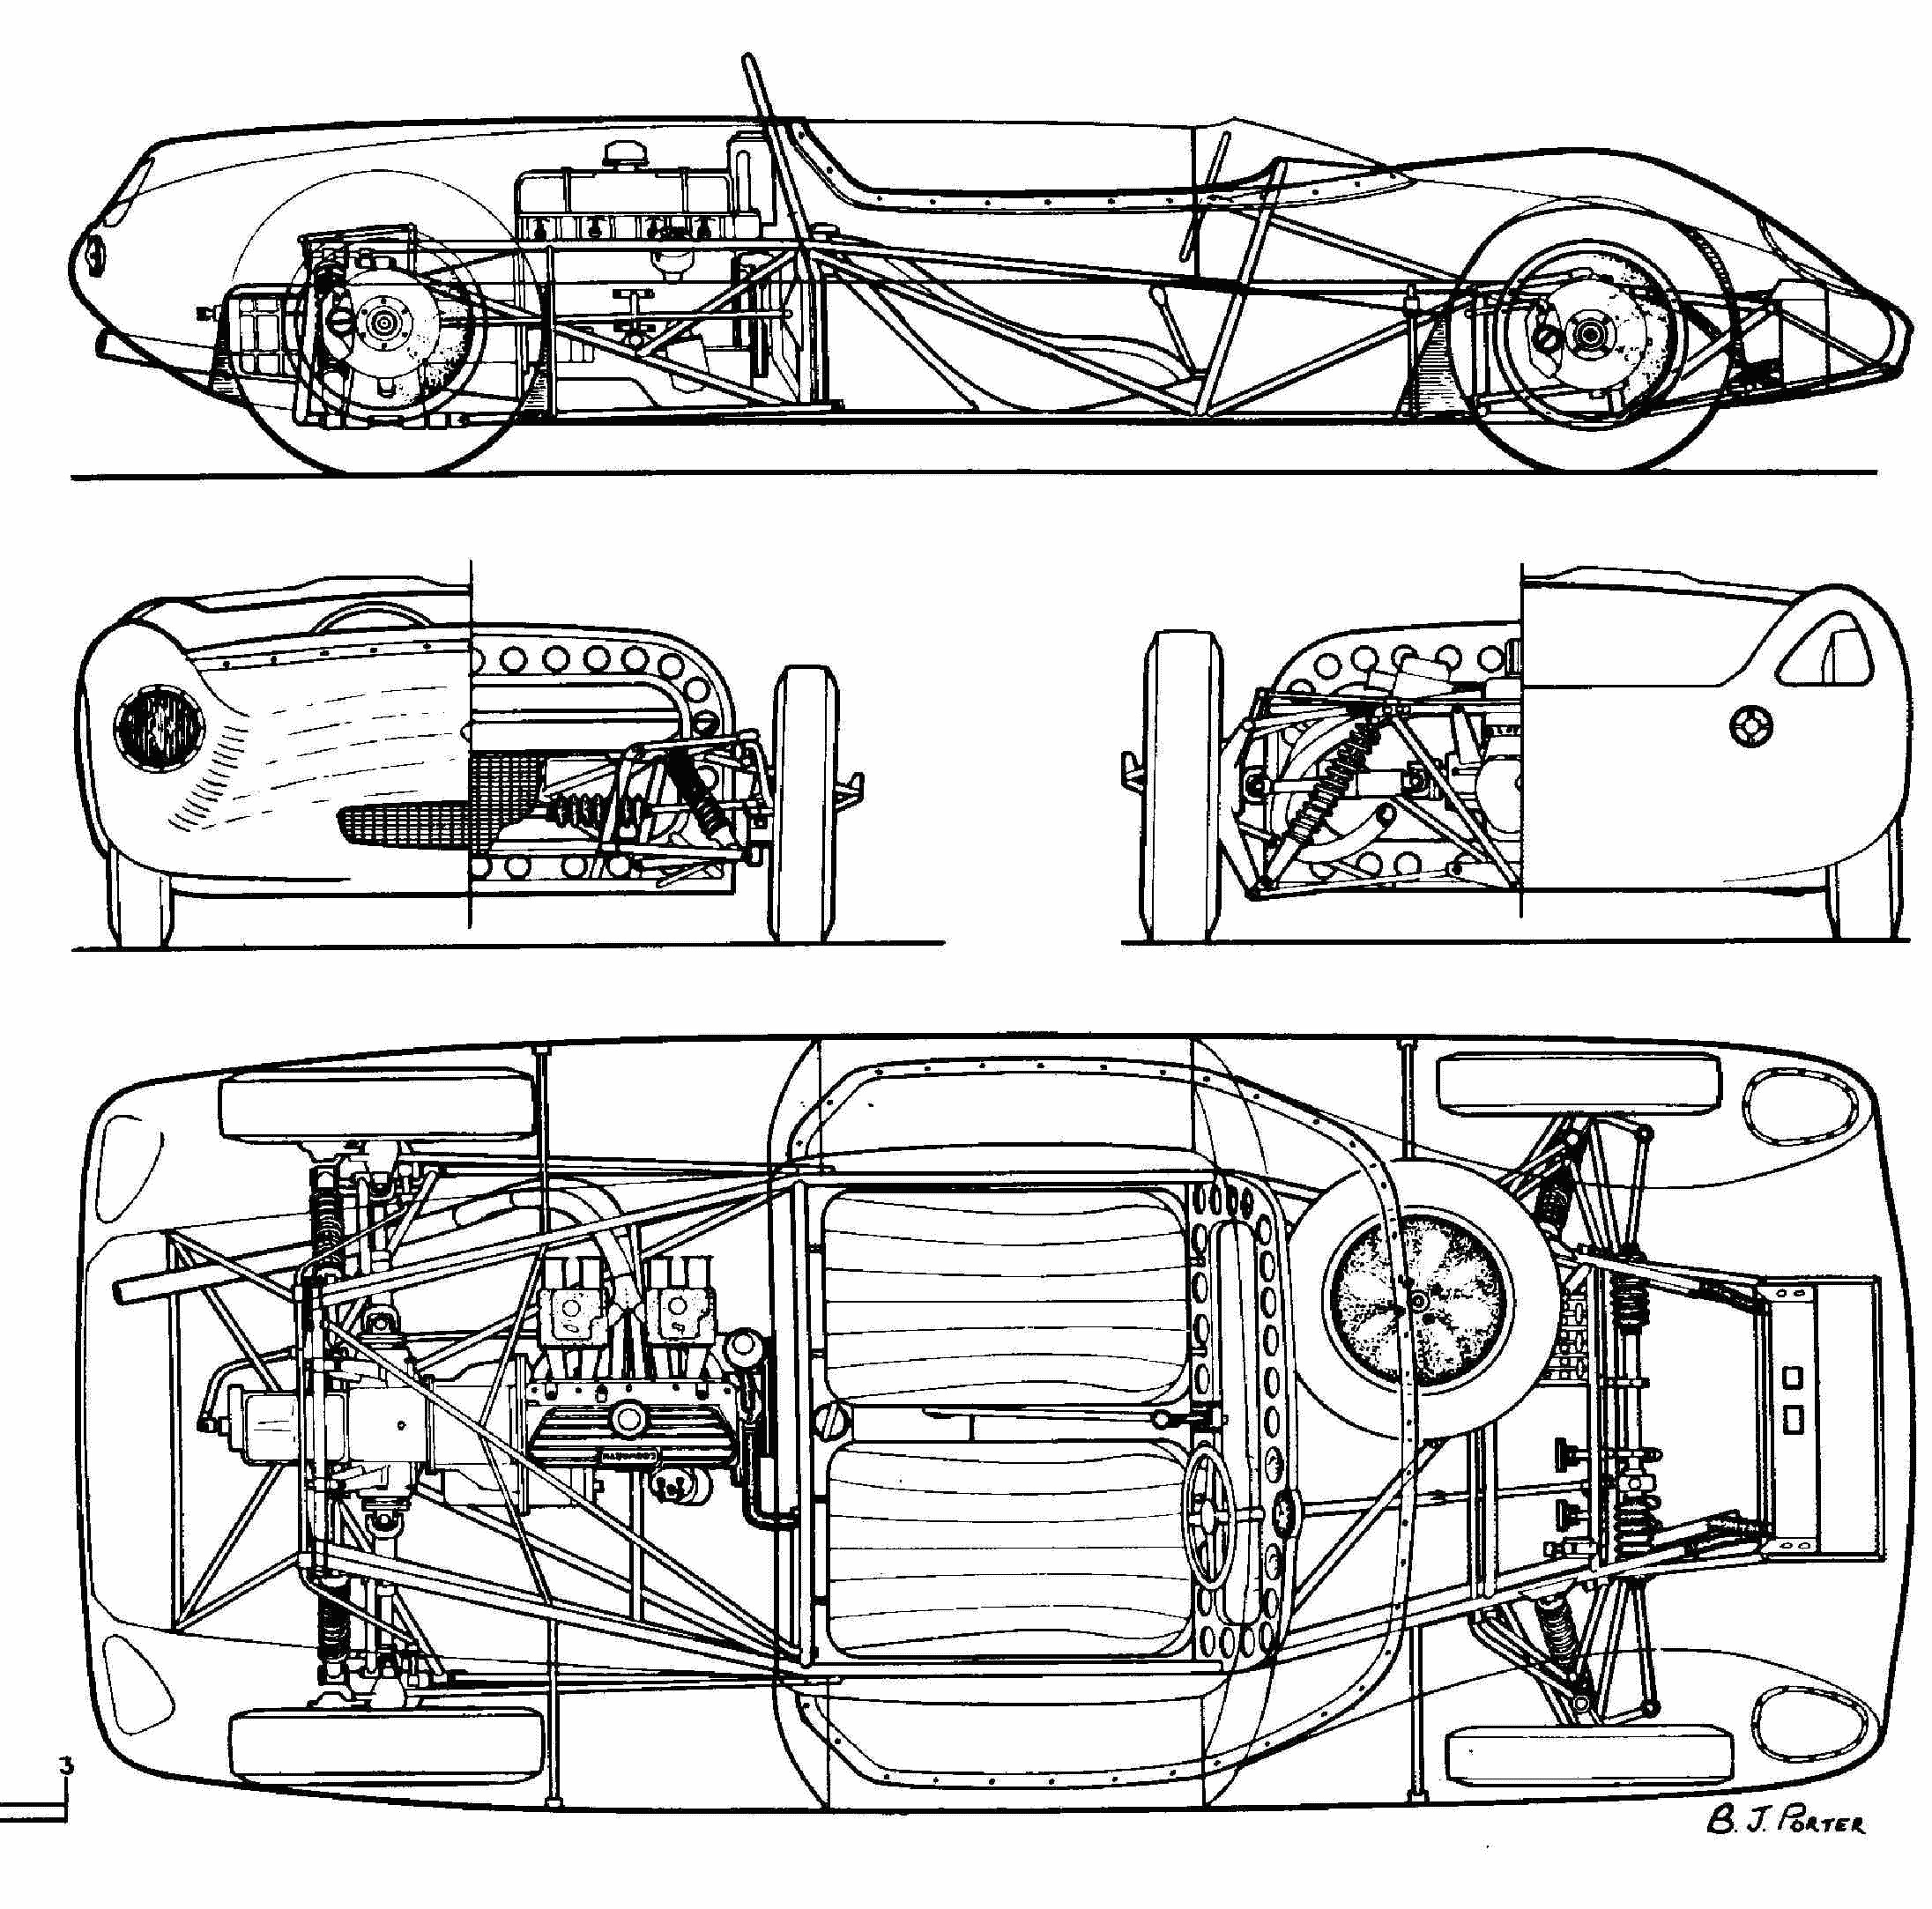 Car Engine Diagram Poster Lotus 23 Blueprint Racing Car Blueprint Pinterest Of Car Engine Diagram Poster